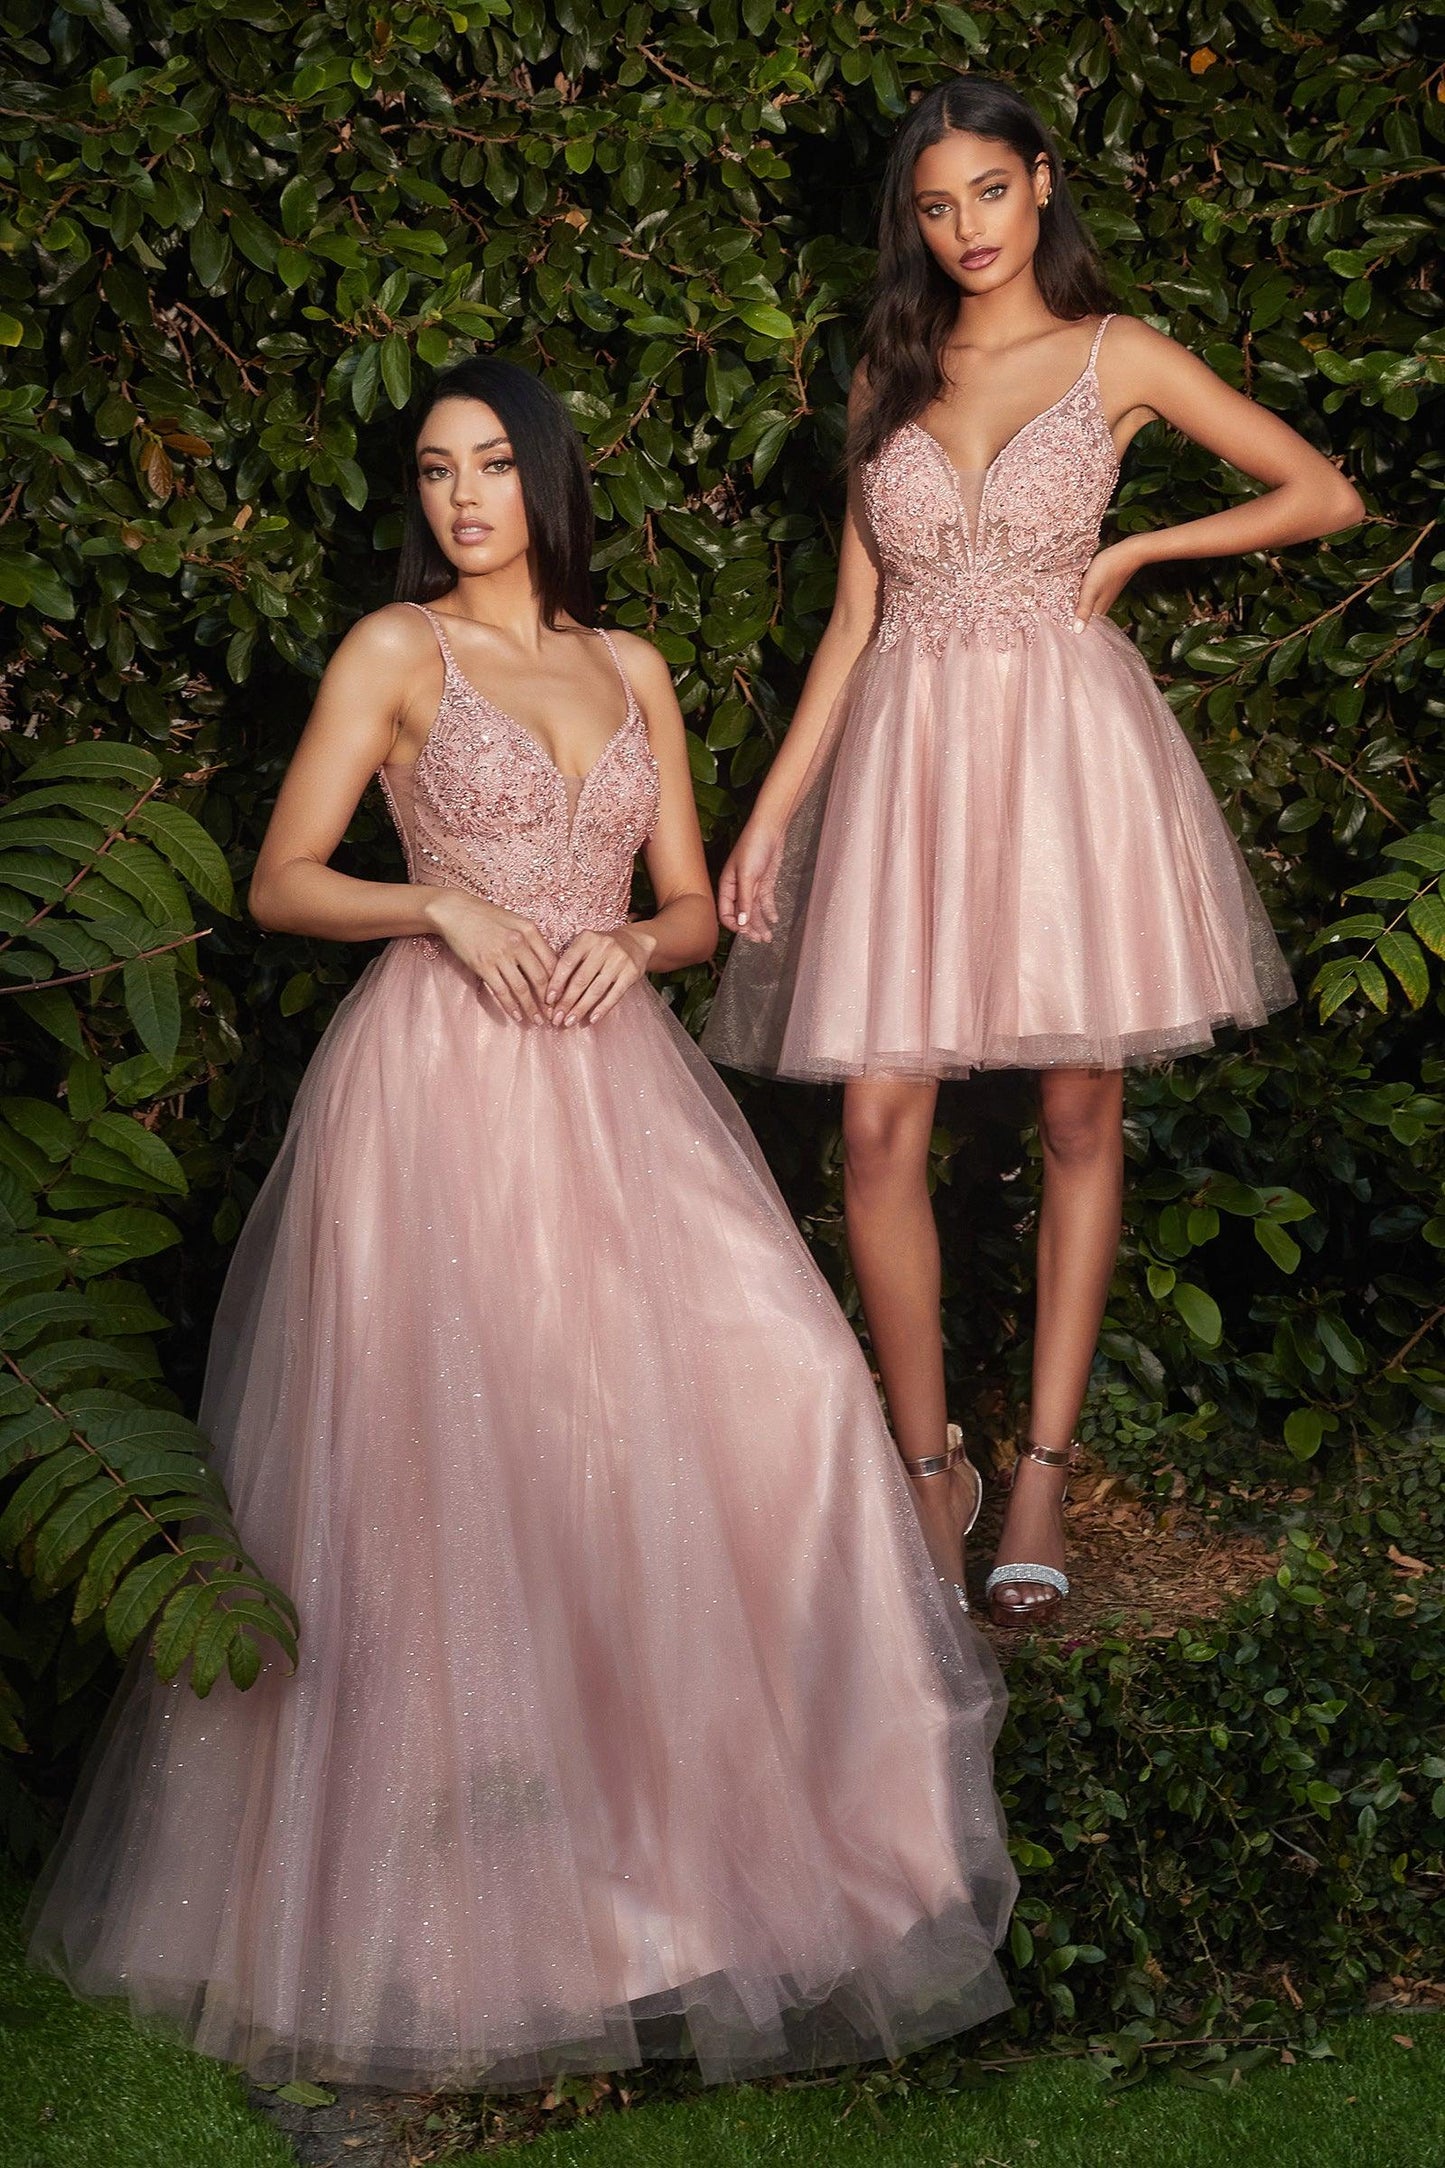 Embellished Sleeveless Long Formal Prom Dress - The Dress Outlet